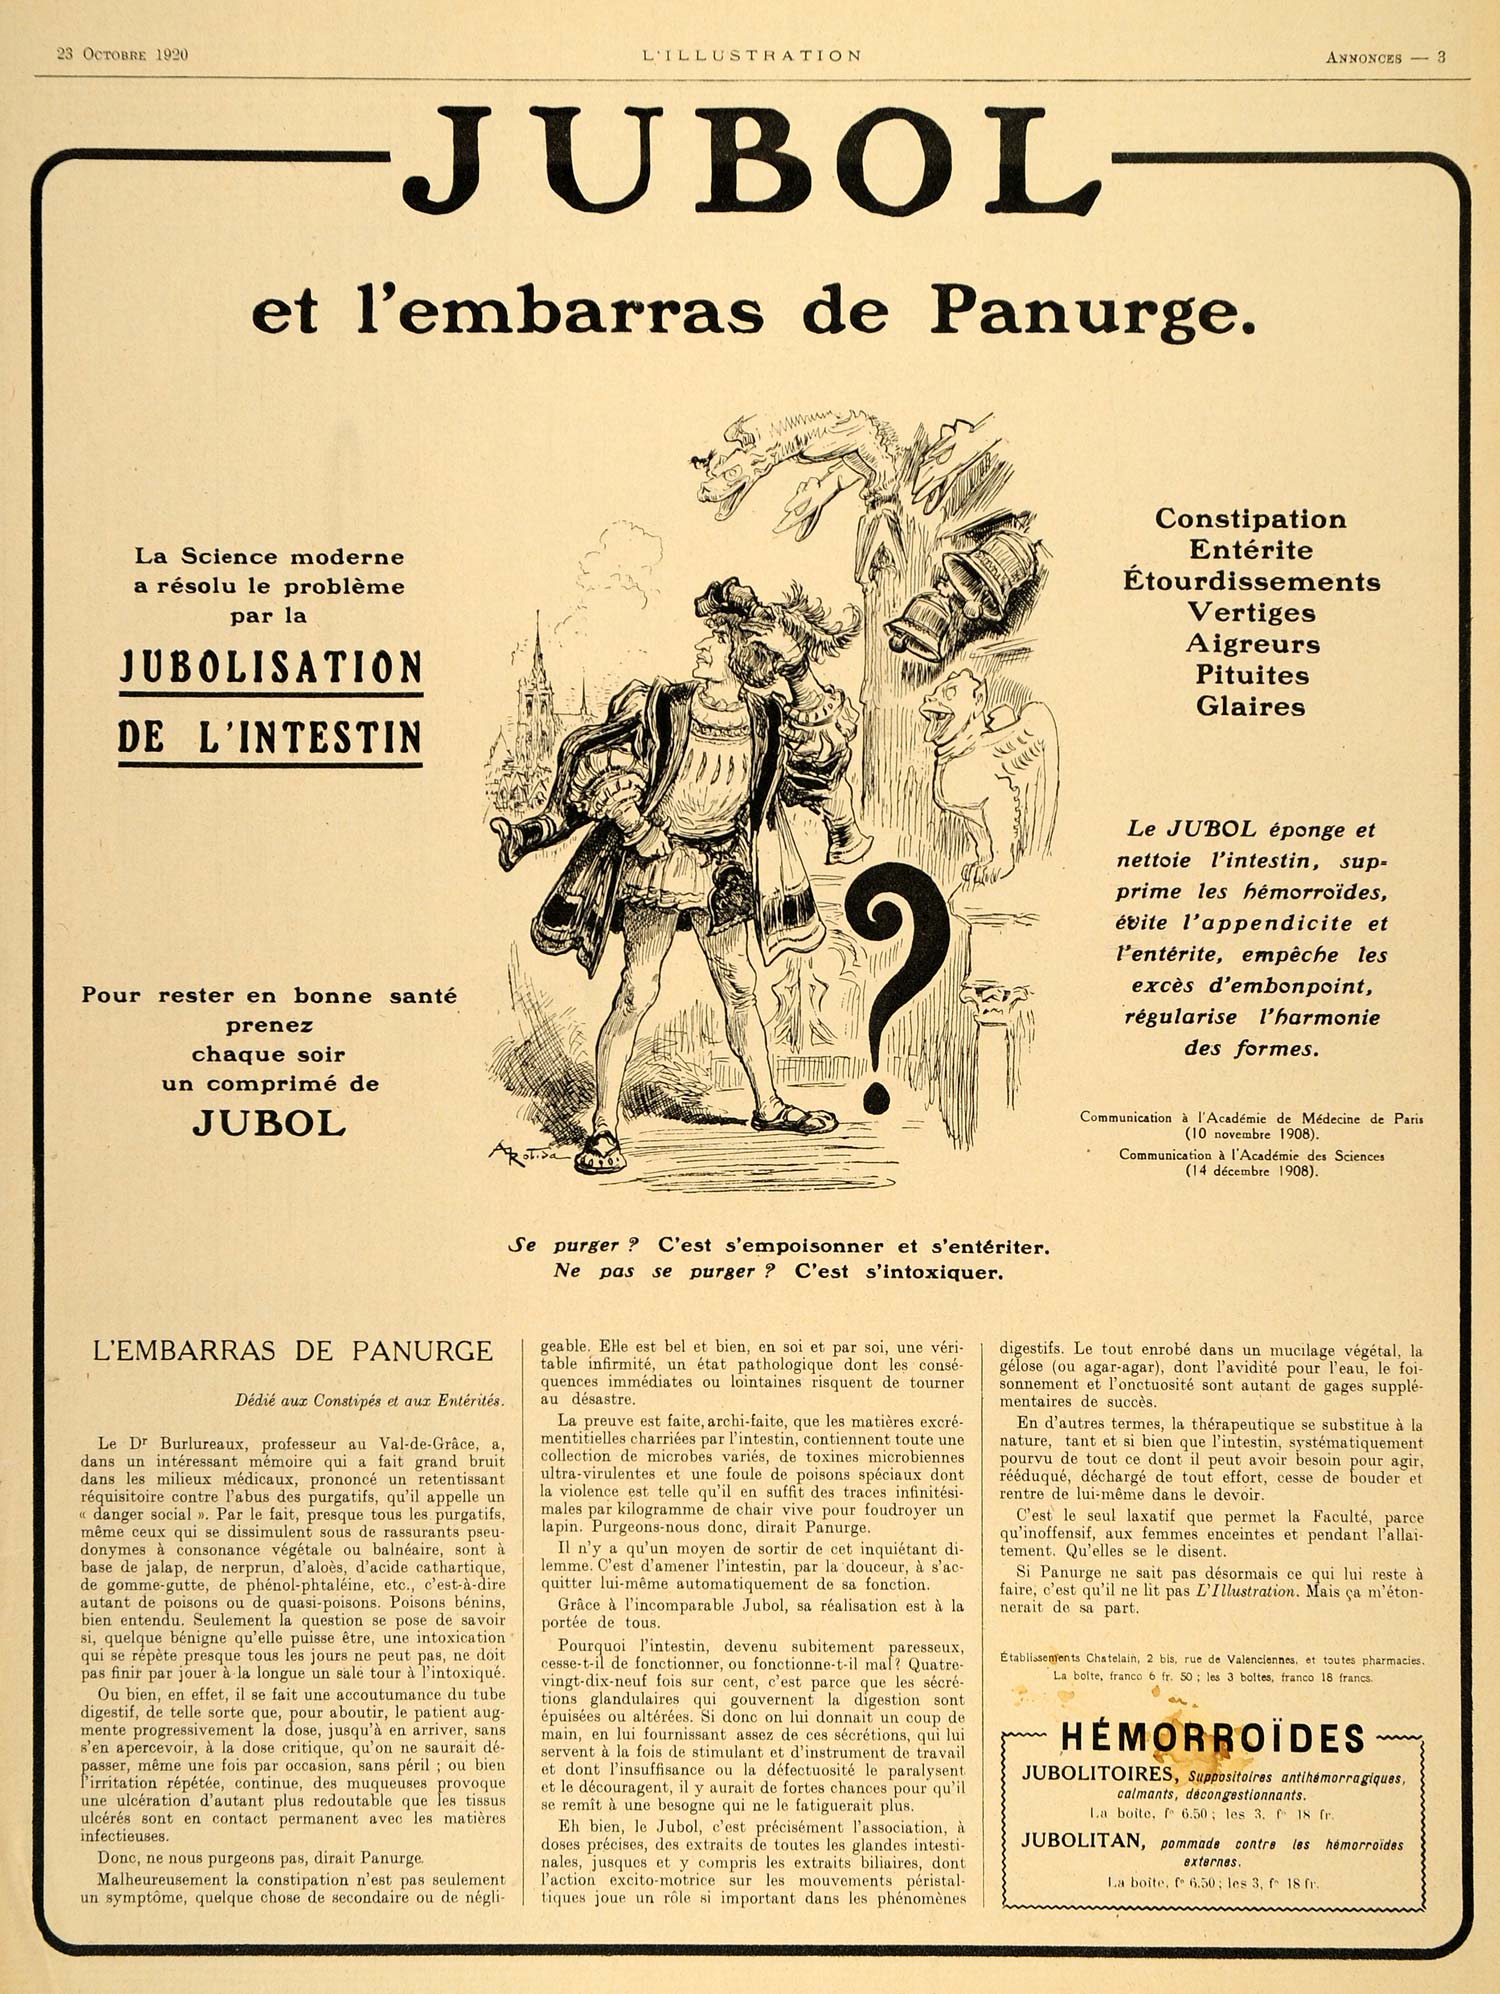 1920 Ad French Digestive Disorder Health Jubol Panurge - ORIGINAL ILL3